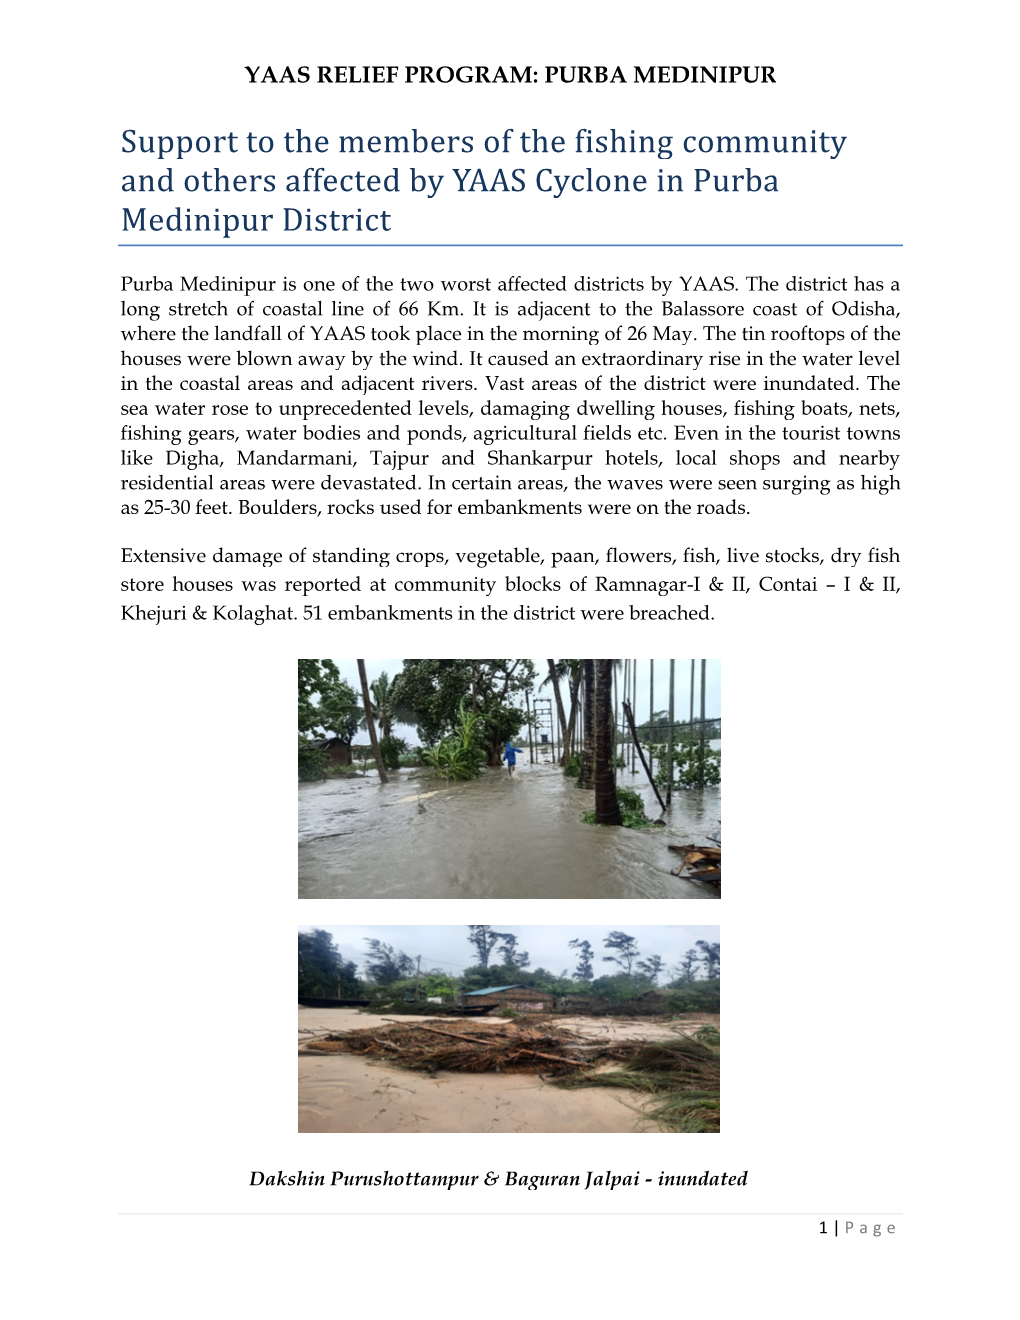 YAAS Relief Program Purba Medinipur